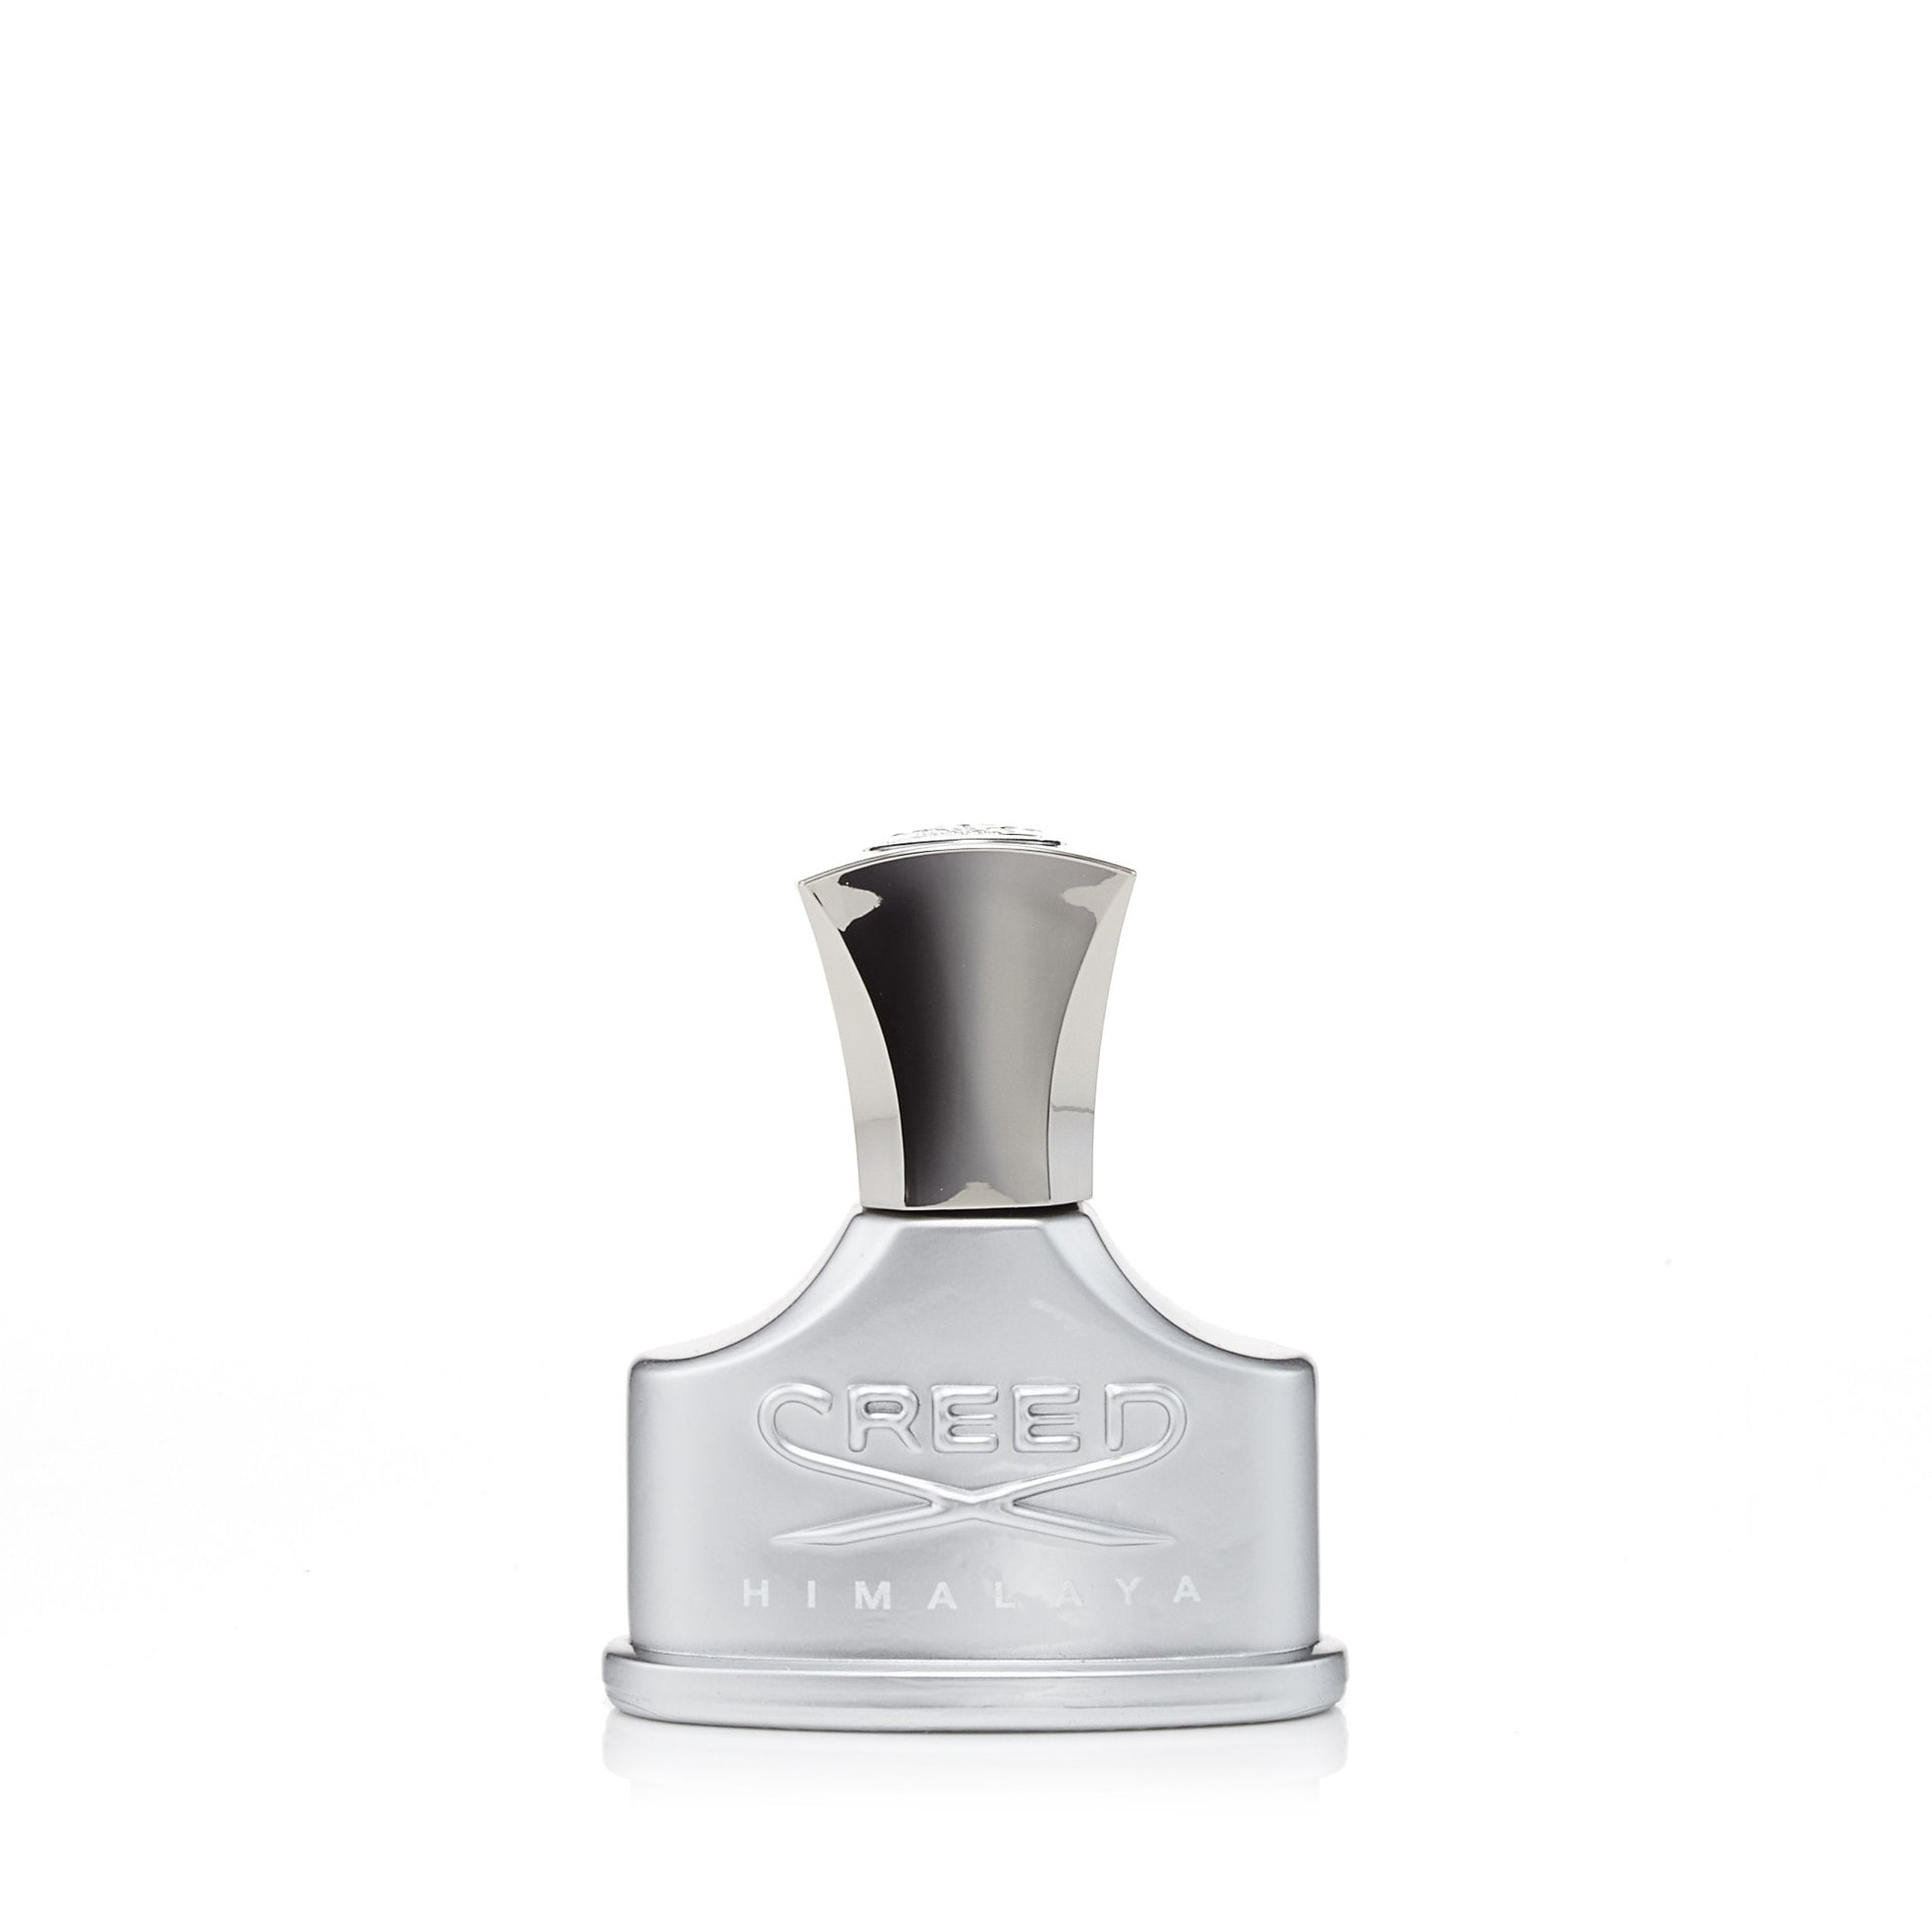 Himalaya Eau de Parfum Spray for Men by Creed, Product image 3